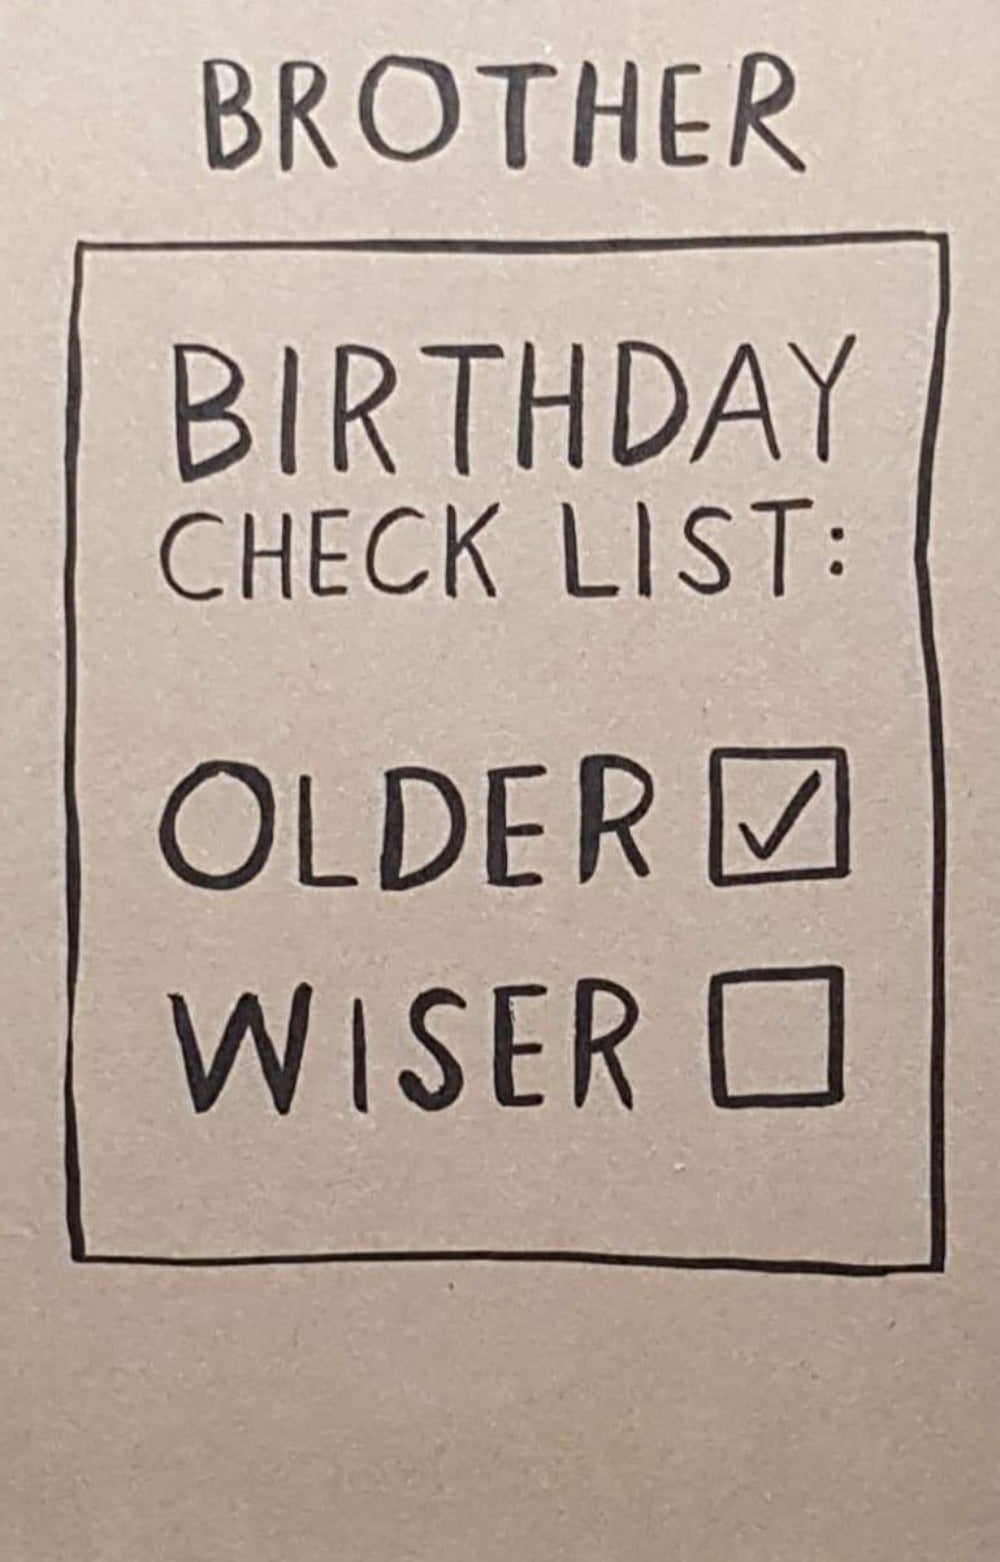 Birthday Card - Brother / 'Check List'